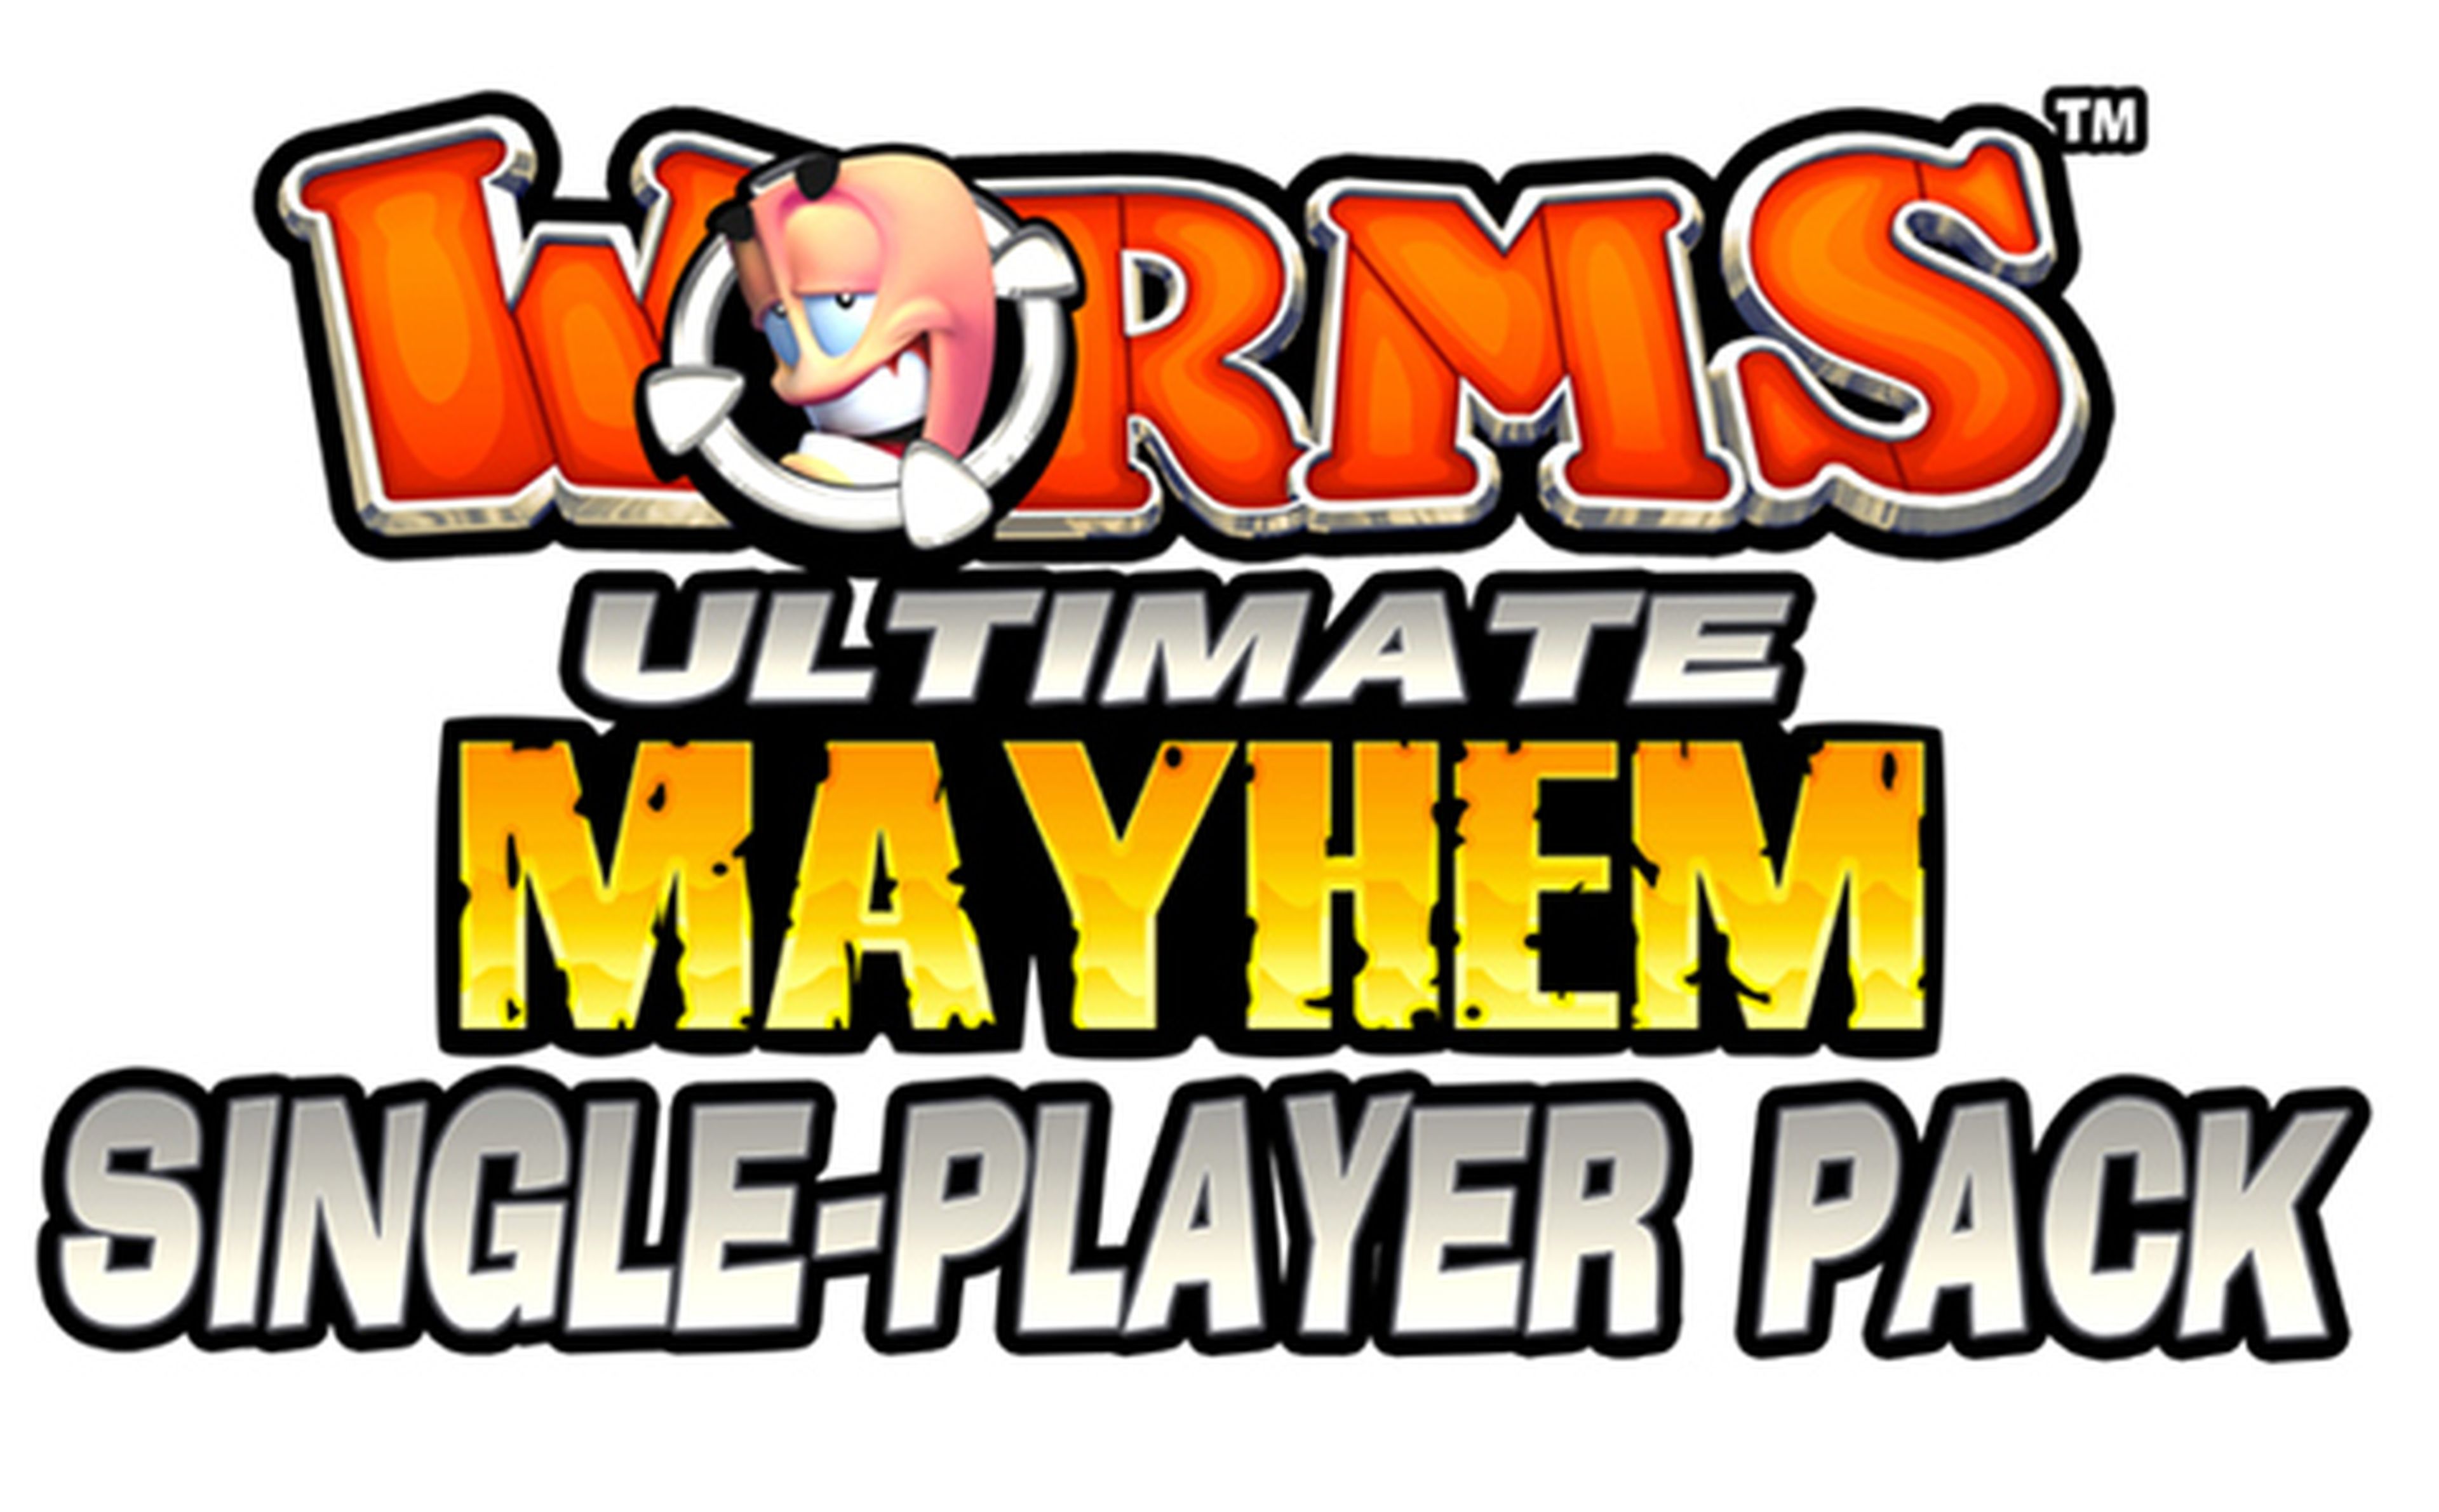 Nuevo DLC para Worms Ultimate Mayhem